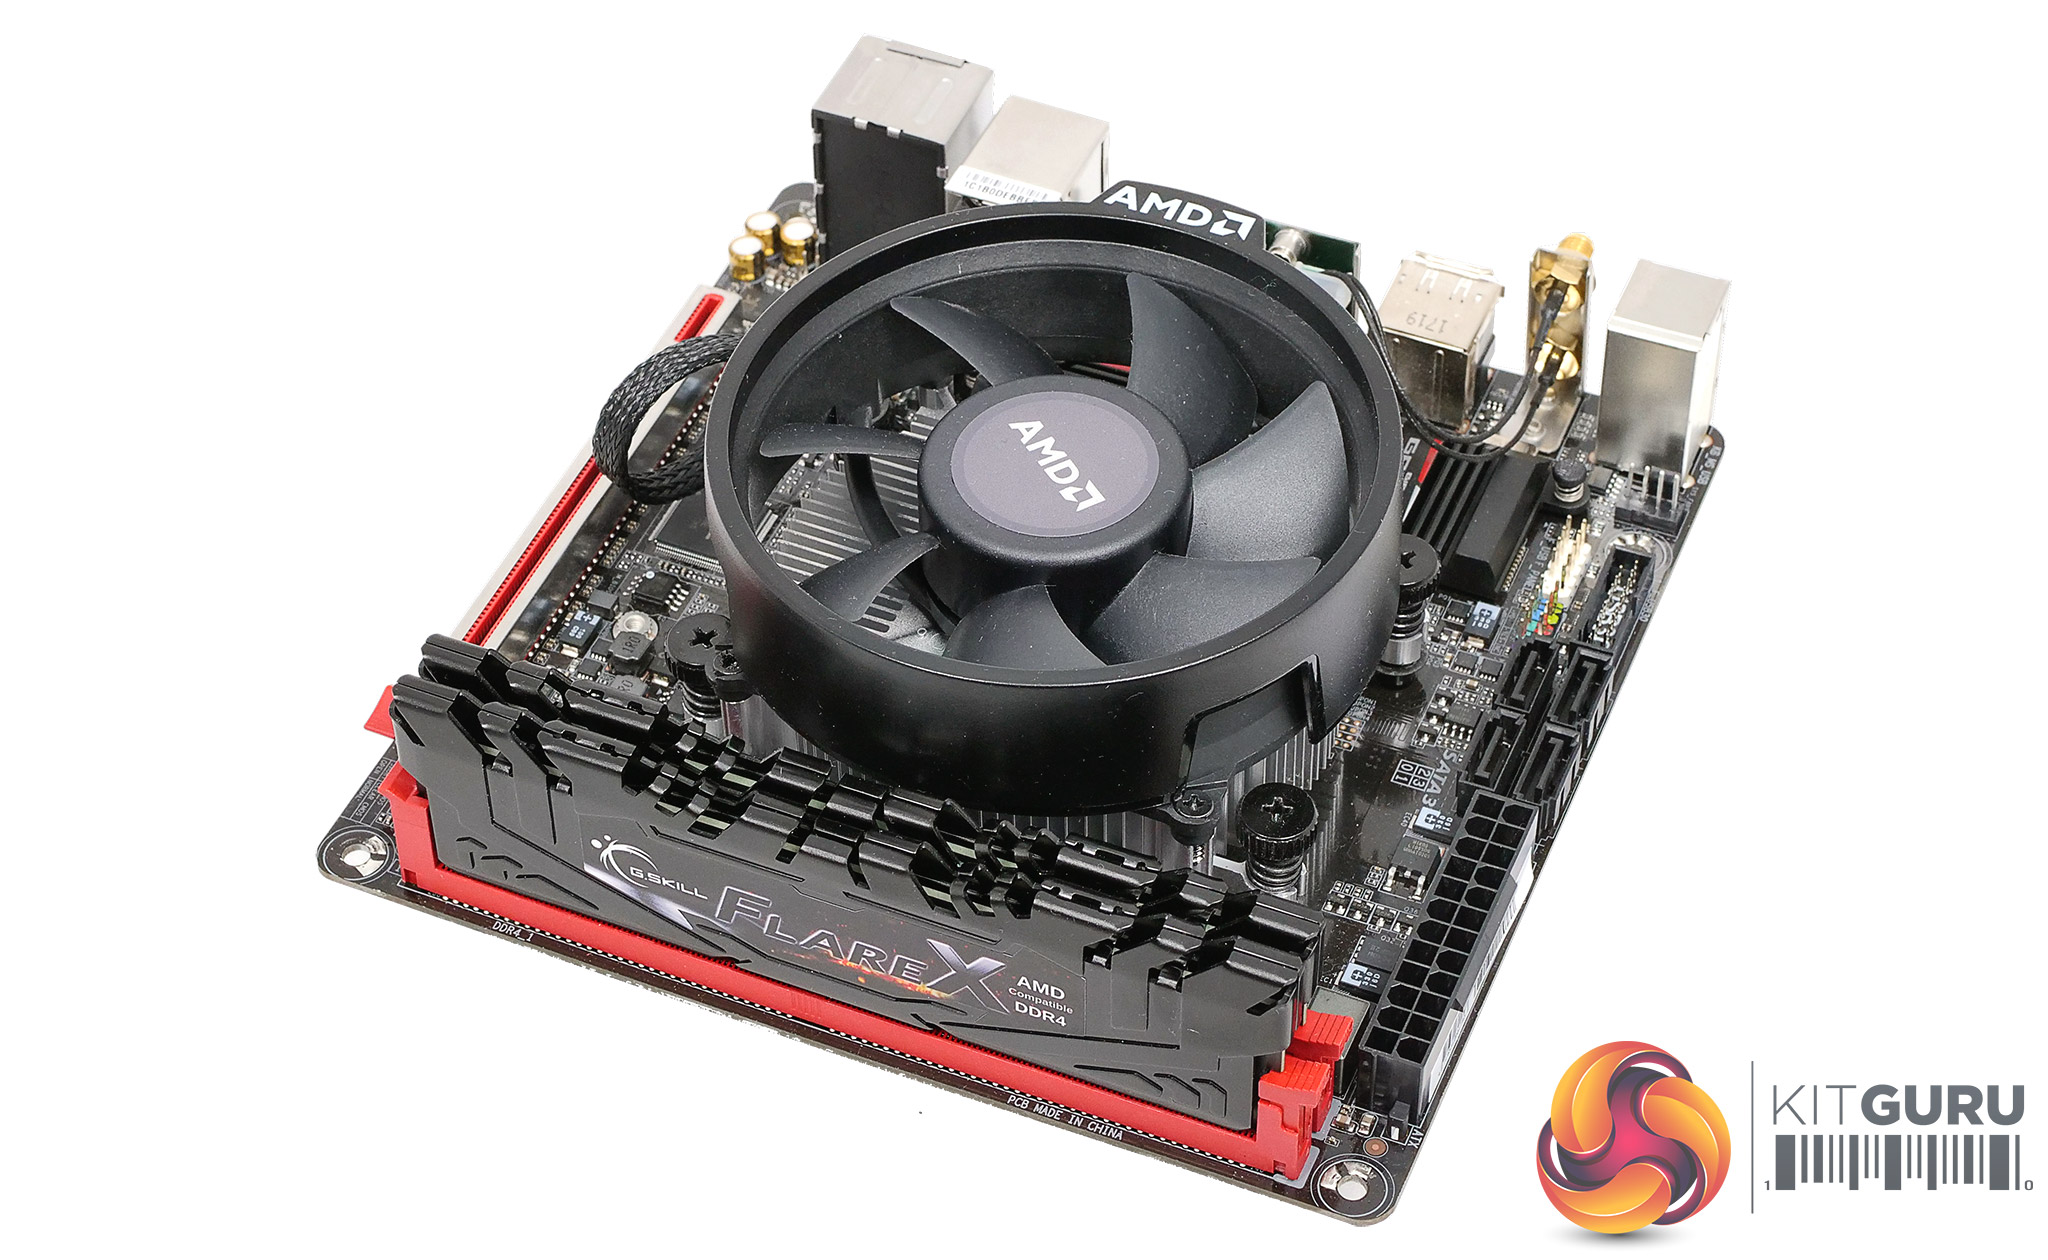 AMD Ryzen 5 2400G & Ryzen 3 2200G Raven Ridge APU Review | KitGuru